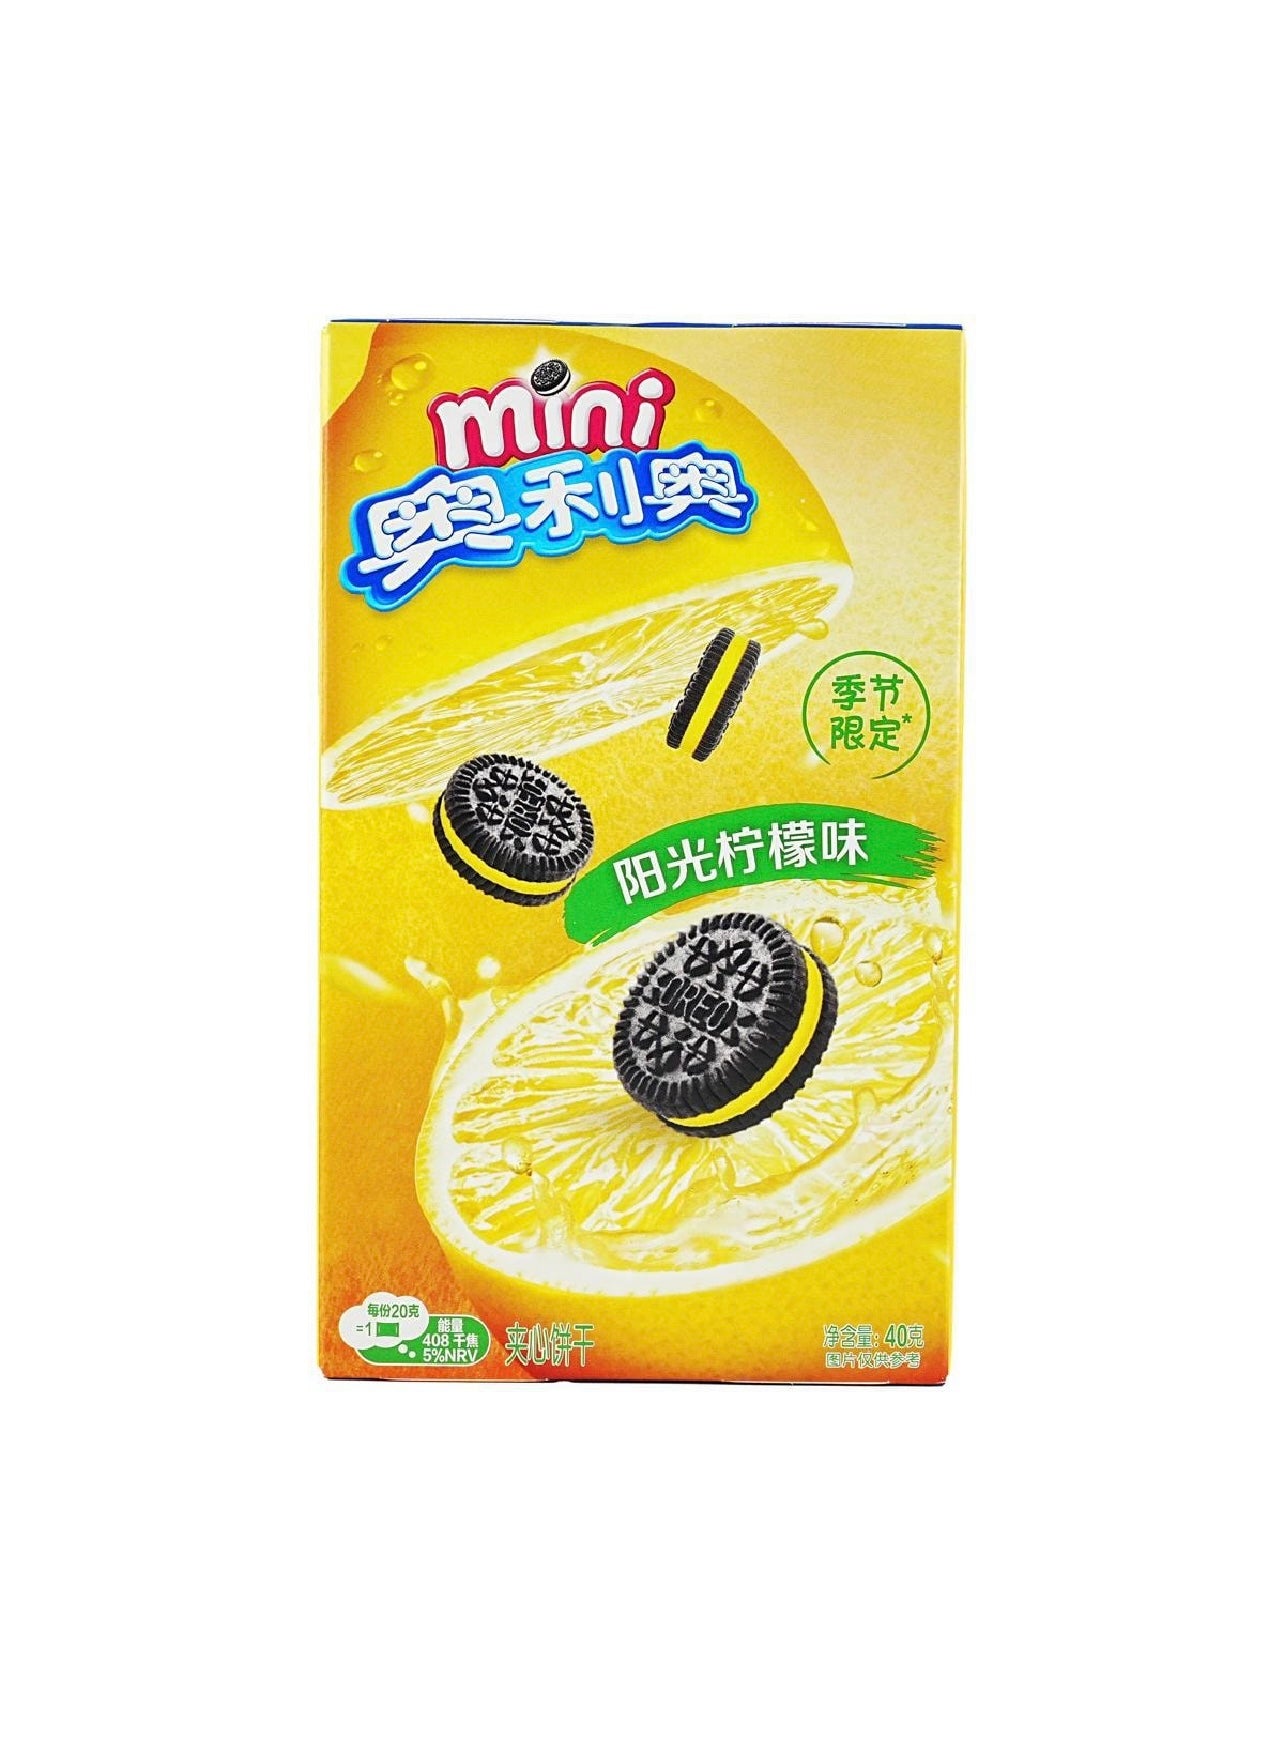 OREO Biscuit Lemon Flavor 1.41 oz - China